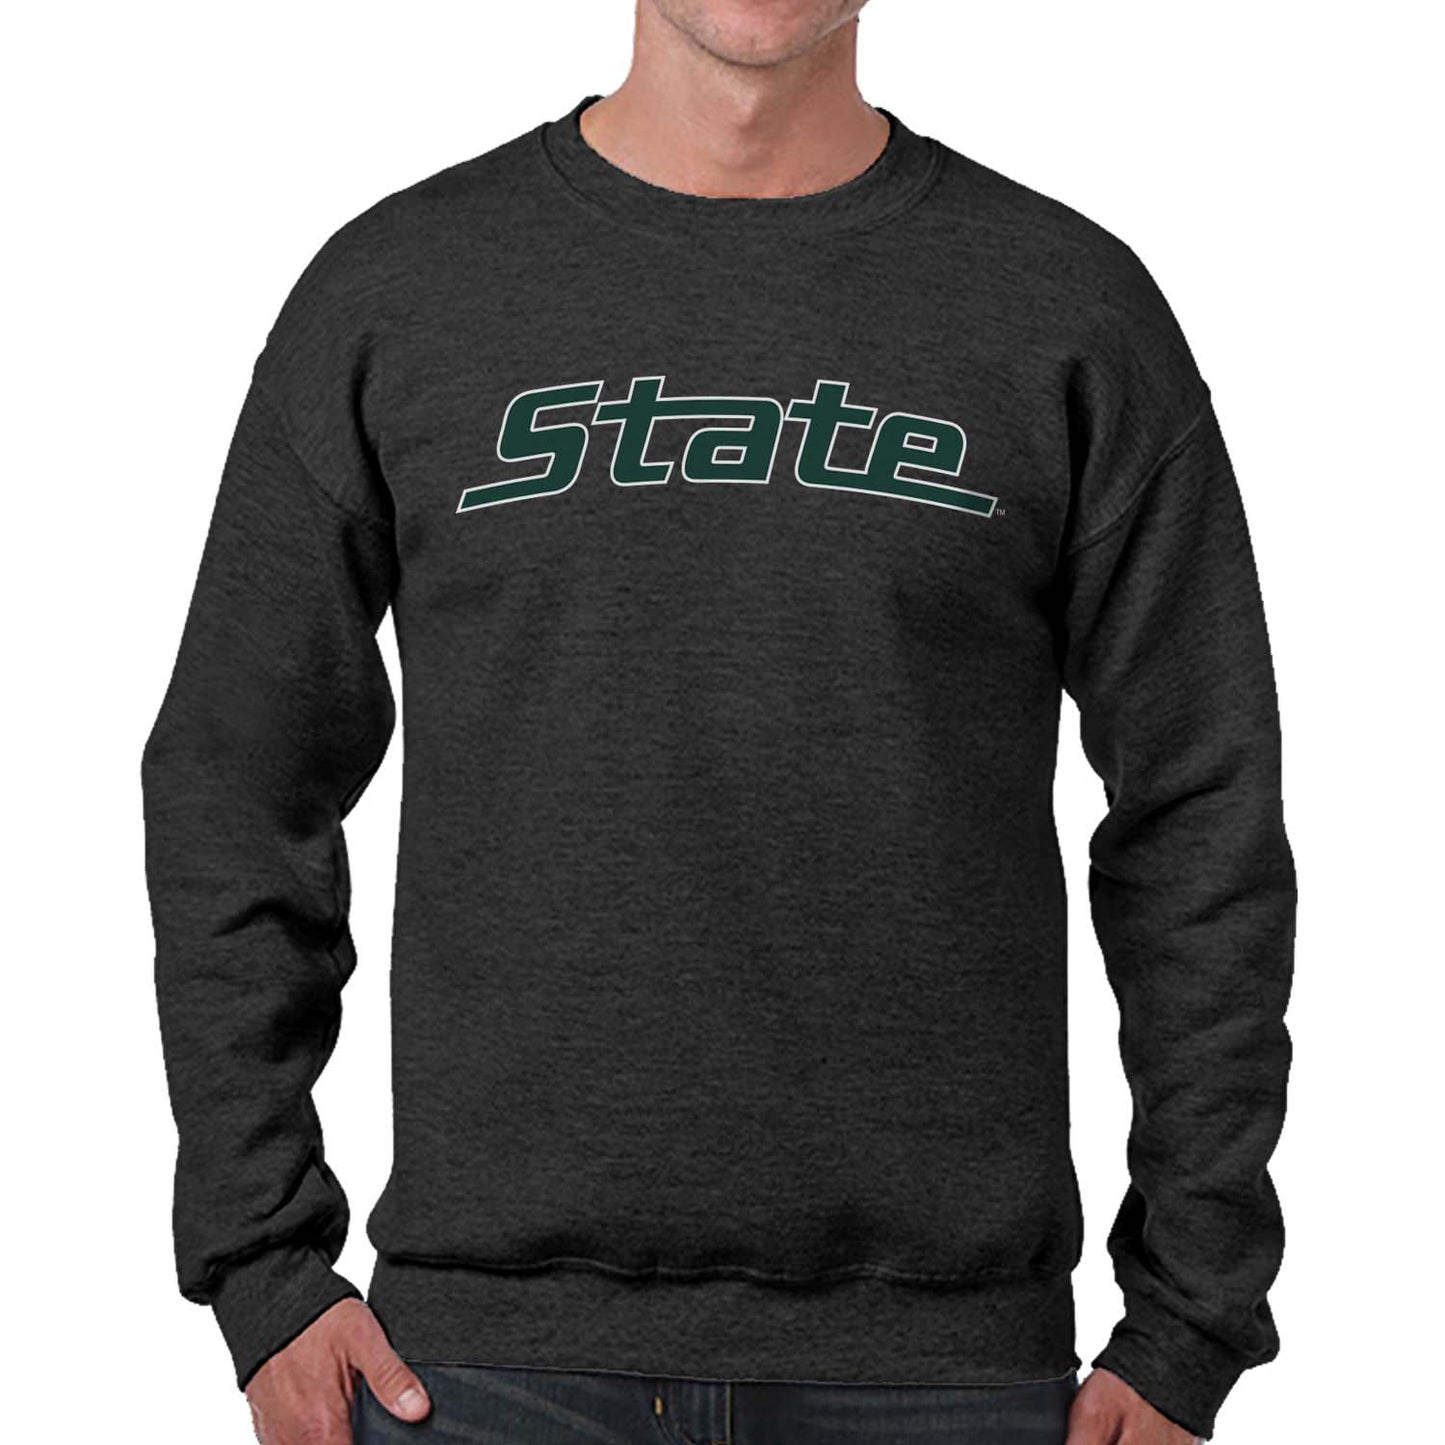 Michigan State Spartans NCAA Adult Charcoal Crewneck Fleece Sweatshirt - Charcoal